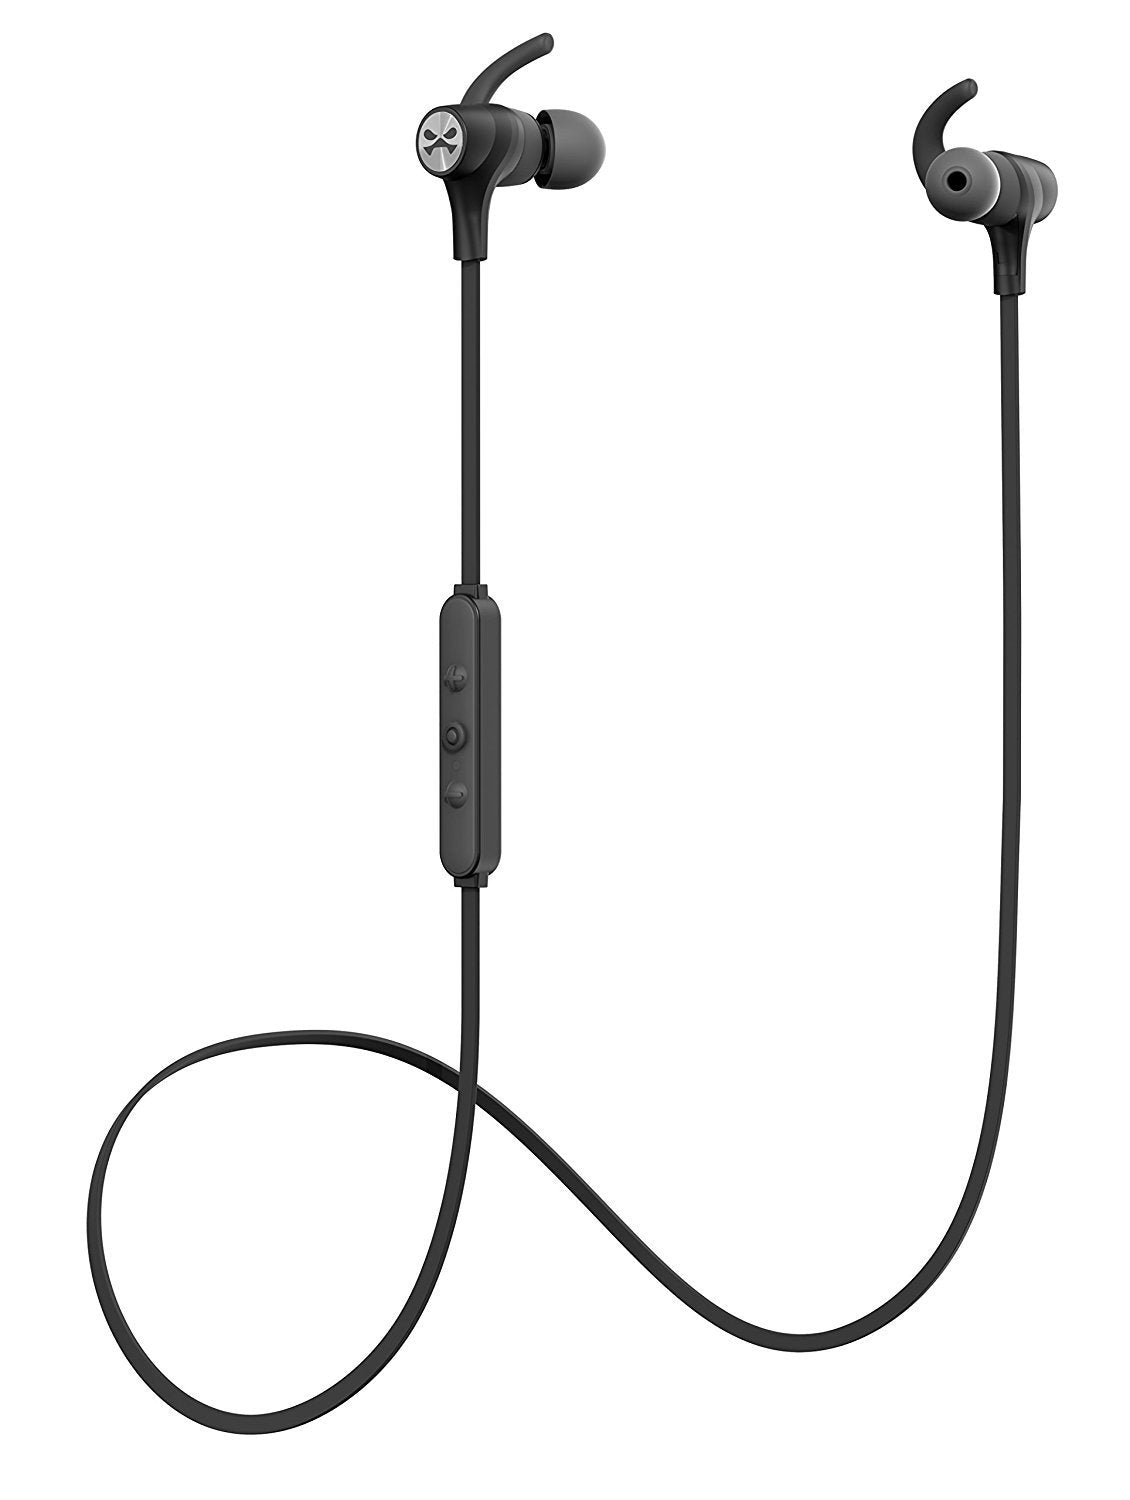 Wireless Bluetooth Earbuds Stereo Headphones, Ghostek Silencer Series Earphones With Mic + Controls - Black